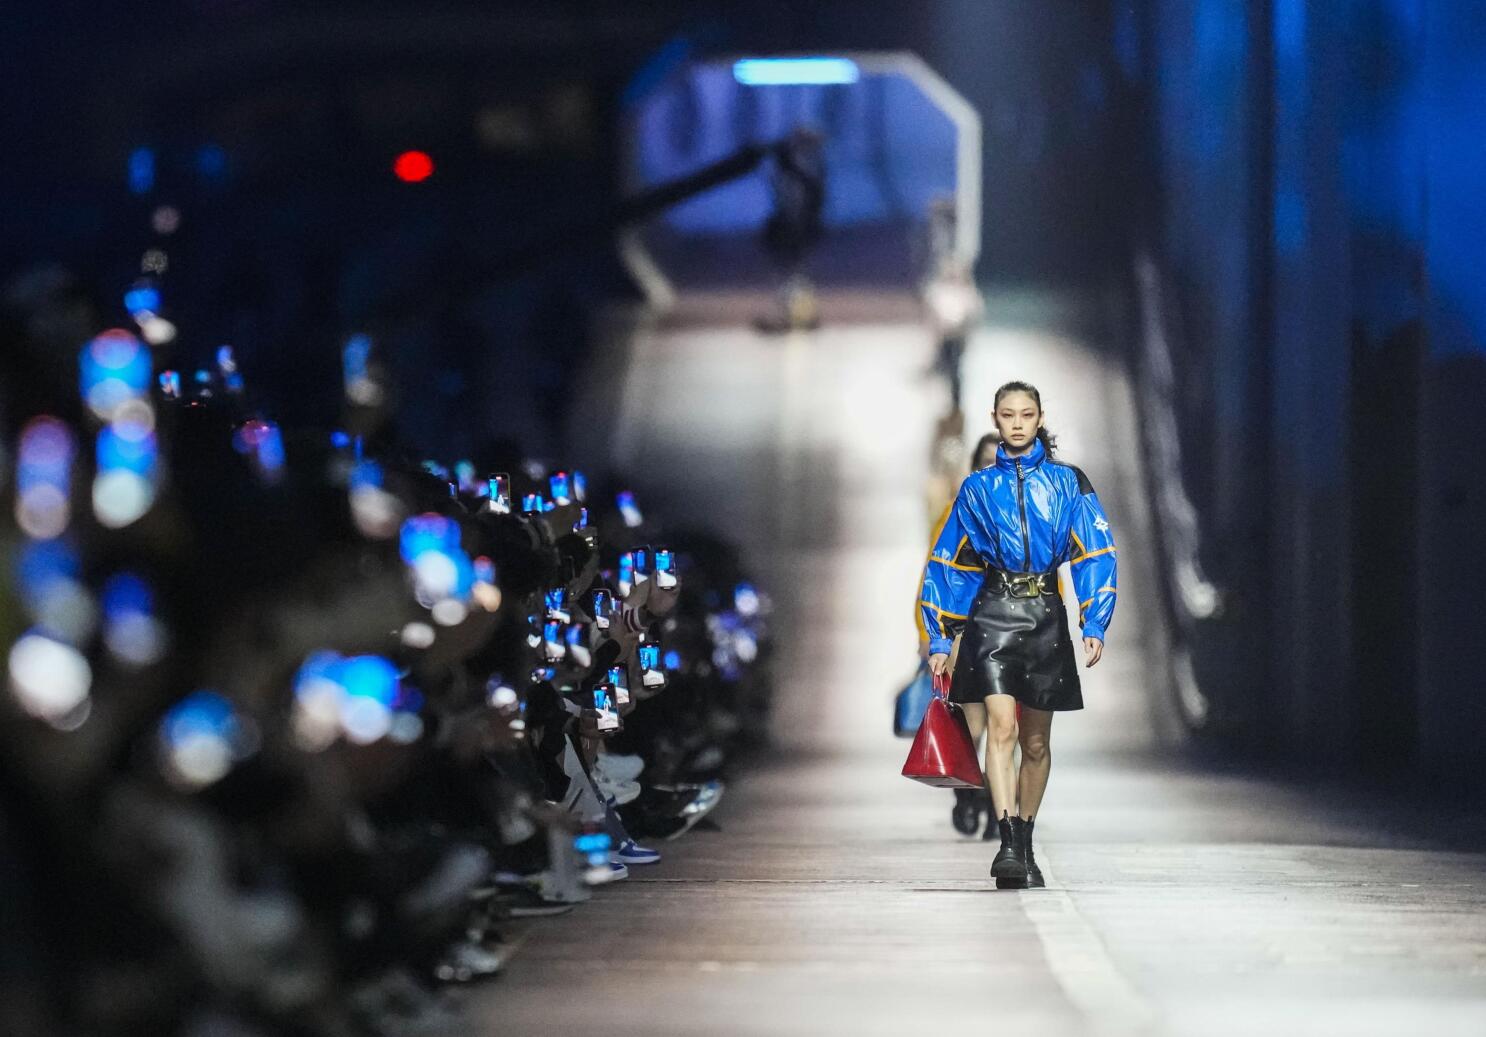 Chloe Grace Moretz Stars In New Louis Vuitton Sunglass Campaign